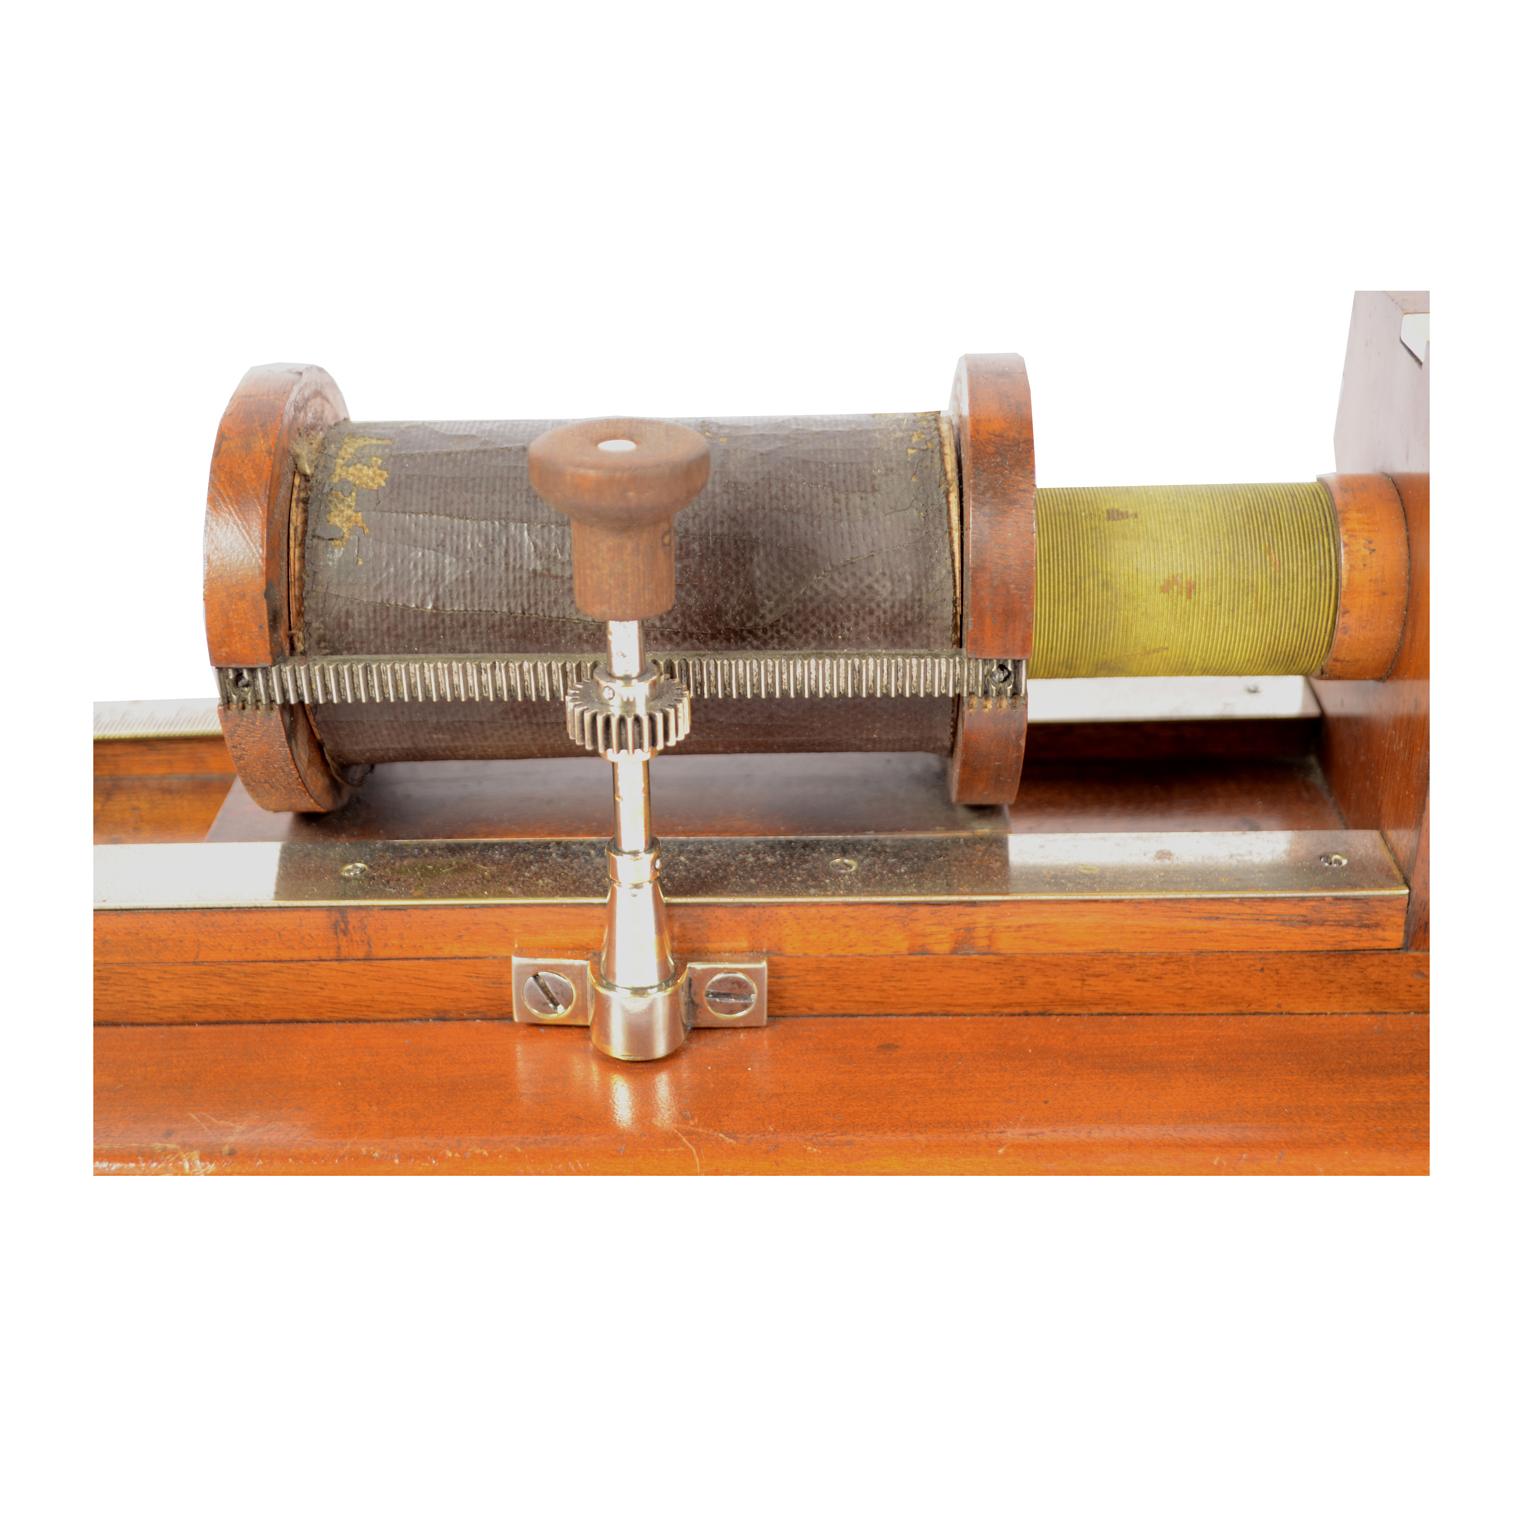 Induction Coil or Sled Antique Scientific Instrument by Du Bois Reymond 1870  For Sale 8